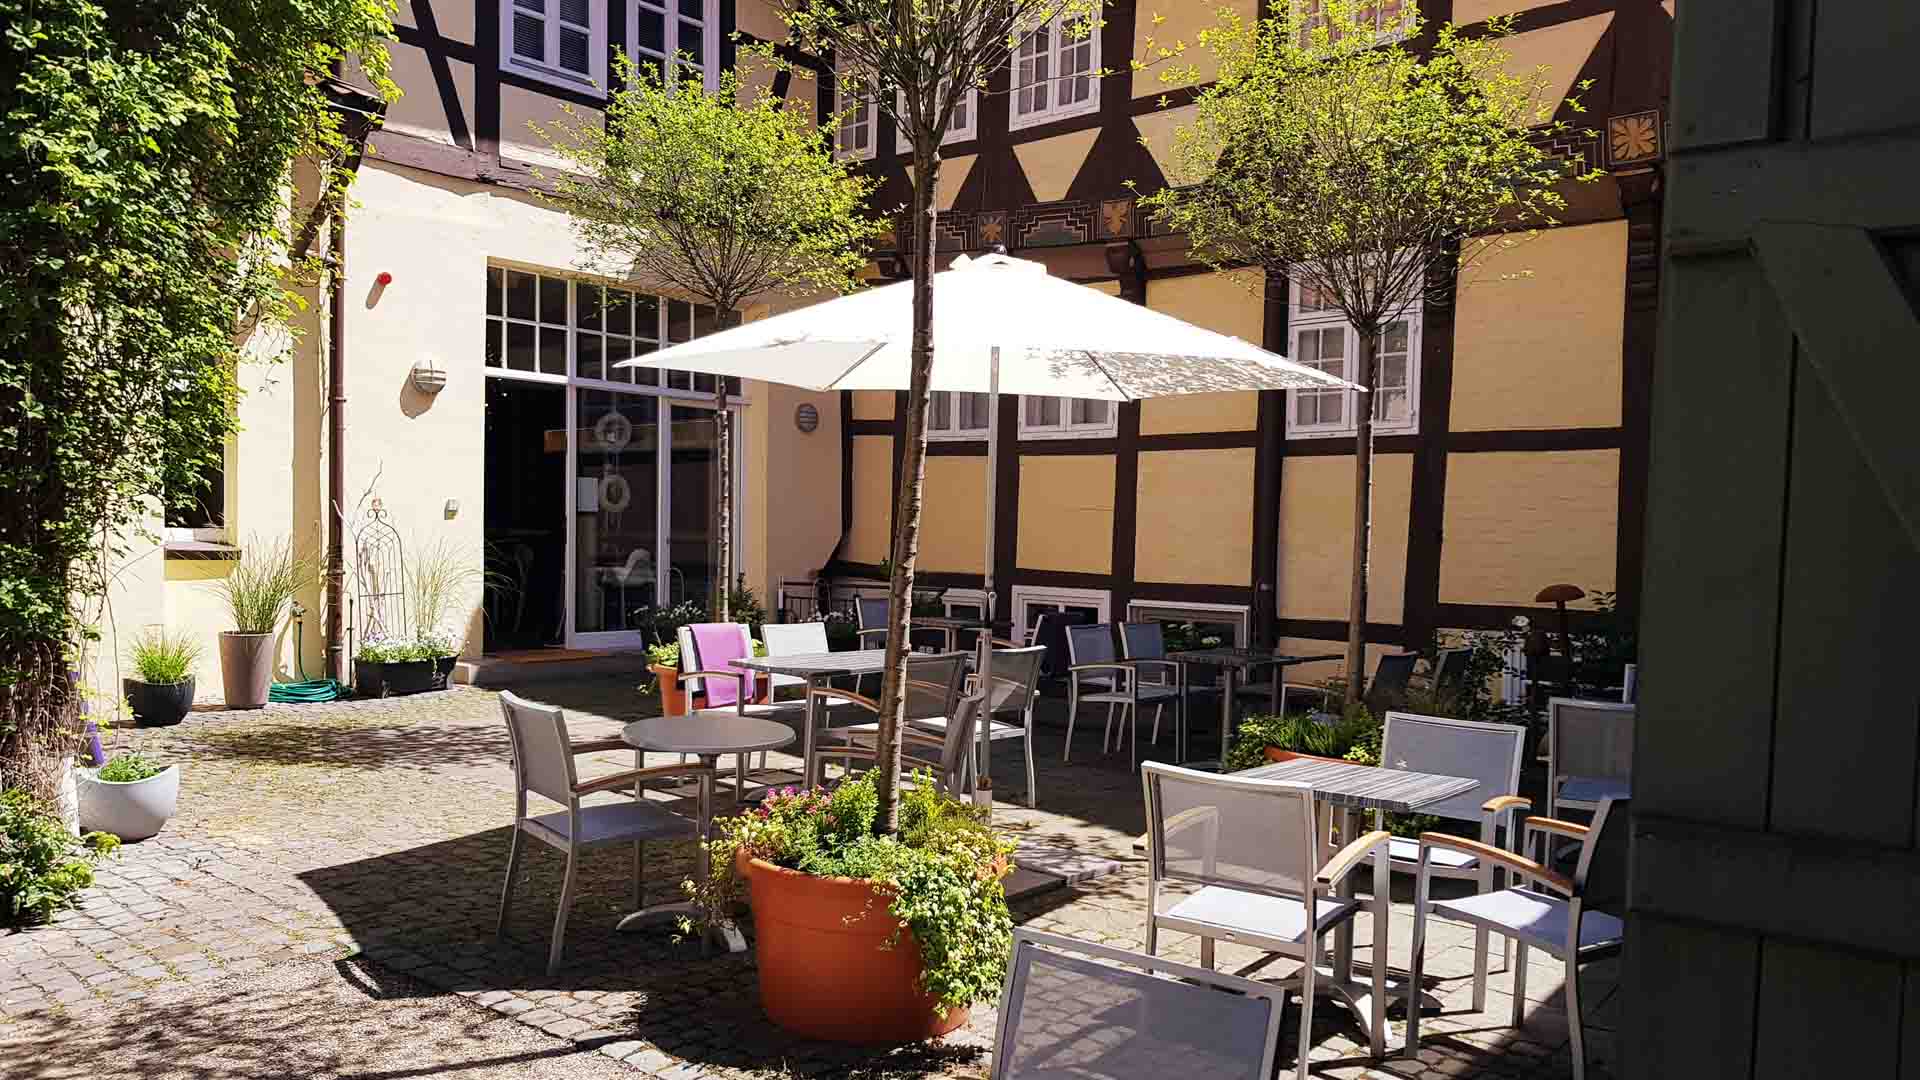 Bild vergrößern: Café Baxmann Celle, Innenhof